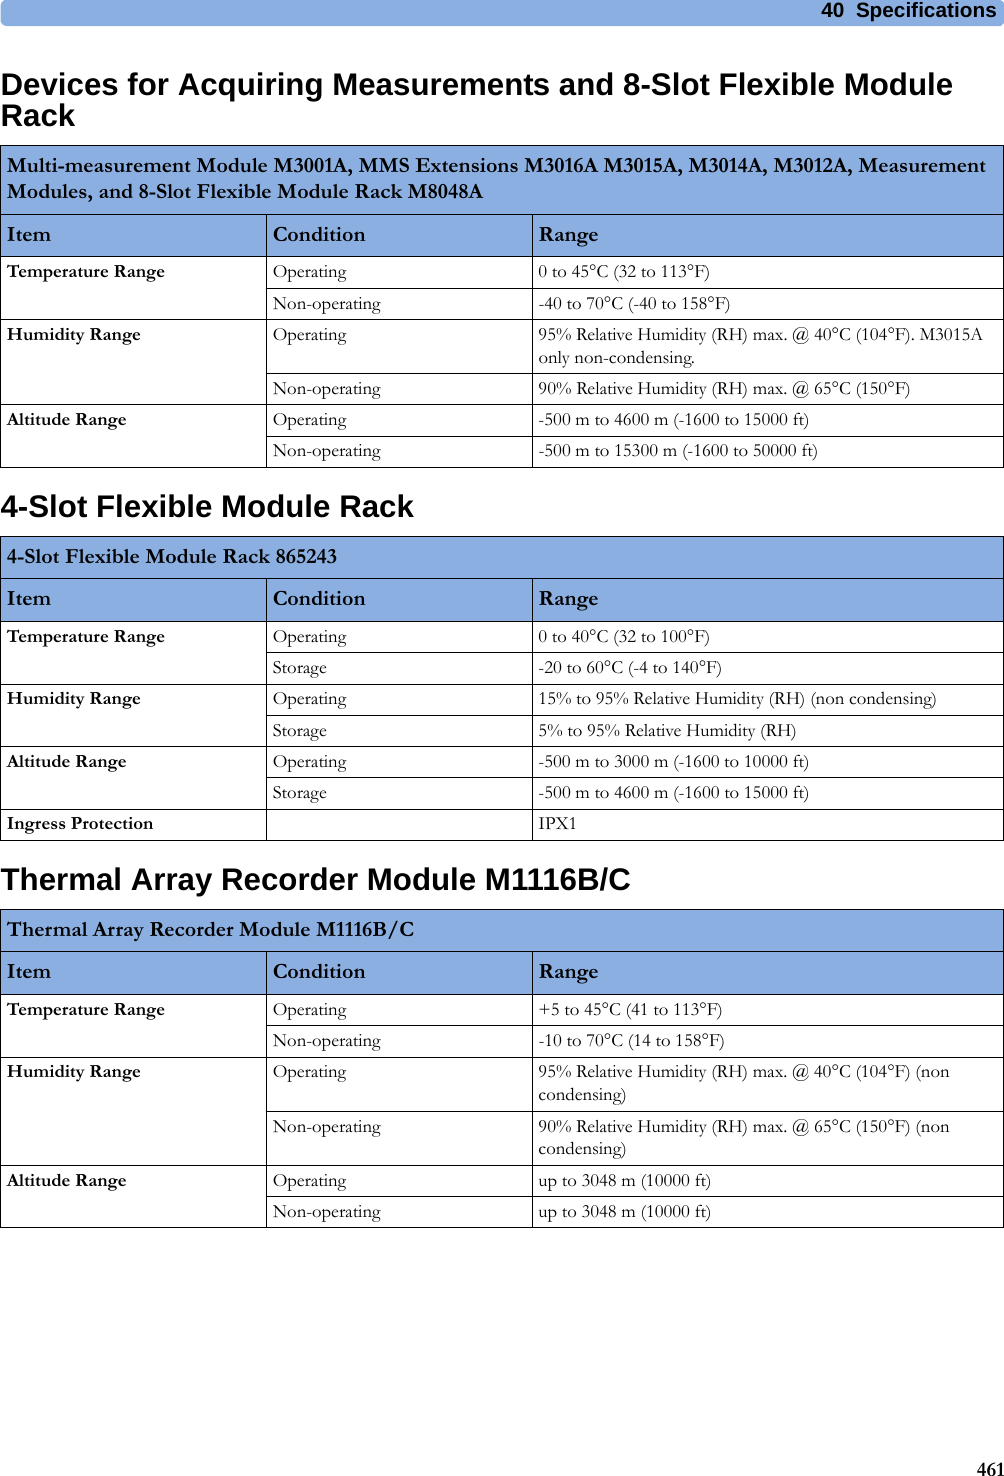 40 Specifications461Devices for Acquiring Measurements and 8-Slot Flexible Module Rack4-Slot Flexible Module RackThermal Array Recorder Module M1116B/CMulti-measurement Module M3001A, MMS Extensions M3016A M3015A, M3014A, M3012A, Measurement Modules, and 8-Slot Flexible Module Rack M8048AItem Condition RangeTemperature Range Operating 0 to 45°C (32 to 113°F)Non-operating -40 to 70°C (-40 to 158°F)Humidity Range Operating 95% Relative Humidity (RH) max. @ 40°C (104°F). M3015A only non-condensing.Non-operating 90% Relative Humidity (RH) max. @ 65°C (150°F)Altitude Range Operating -500 m to 4600 m (-1600 to 15000 ft)Non-operating -500 m to 15300 m (-1600 to 50000 ft)4-Slot Flexible Module Rack 865243Item Condition RangeTemperature Range Operating 0 to 40°C (32 to 100°F)Storage -20 to 60°C (-4 to 140°F)Humidity Range Operating 15% to 95% Relative Humidity (RH) (non condensing)Storage 5% to 95% Relative Humidity (RH)Altitude Range Operating -500 m to 3000 m (-1600 to 10000 ft)Storage -500 m to 4600 m (-1600 to 15000 ft)Ingress Protection IPX1Thermal Array Recorder Module M1116B/CItem Condition RangeTemperature Range Operating +5 to 45°C (41 to 113°F)Non-operating -10 to 70°C (14 to 158°F)Humidity Range Operating 95% Relative Humidity (RH) max. @ 40°C (104°F) (non condensing)Non-operating 90% Relative Humidity (RH) max. @ 65°C (150°F) (non condensing)Altitude Range Operating up to 3048 m (10000 ft)Non-operating up to 3048 m (10000 ft)